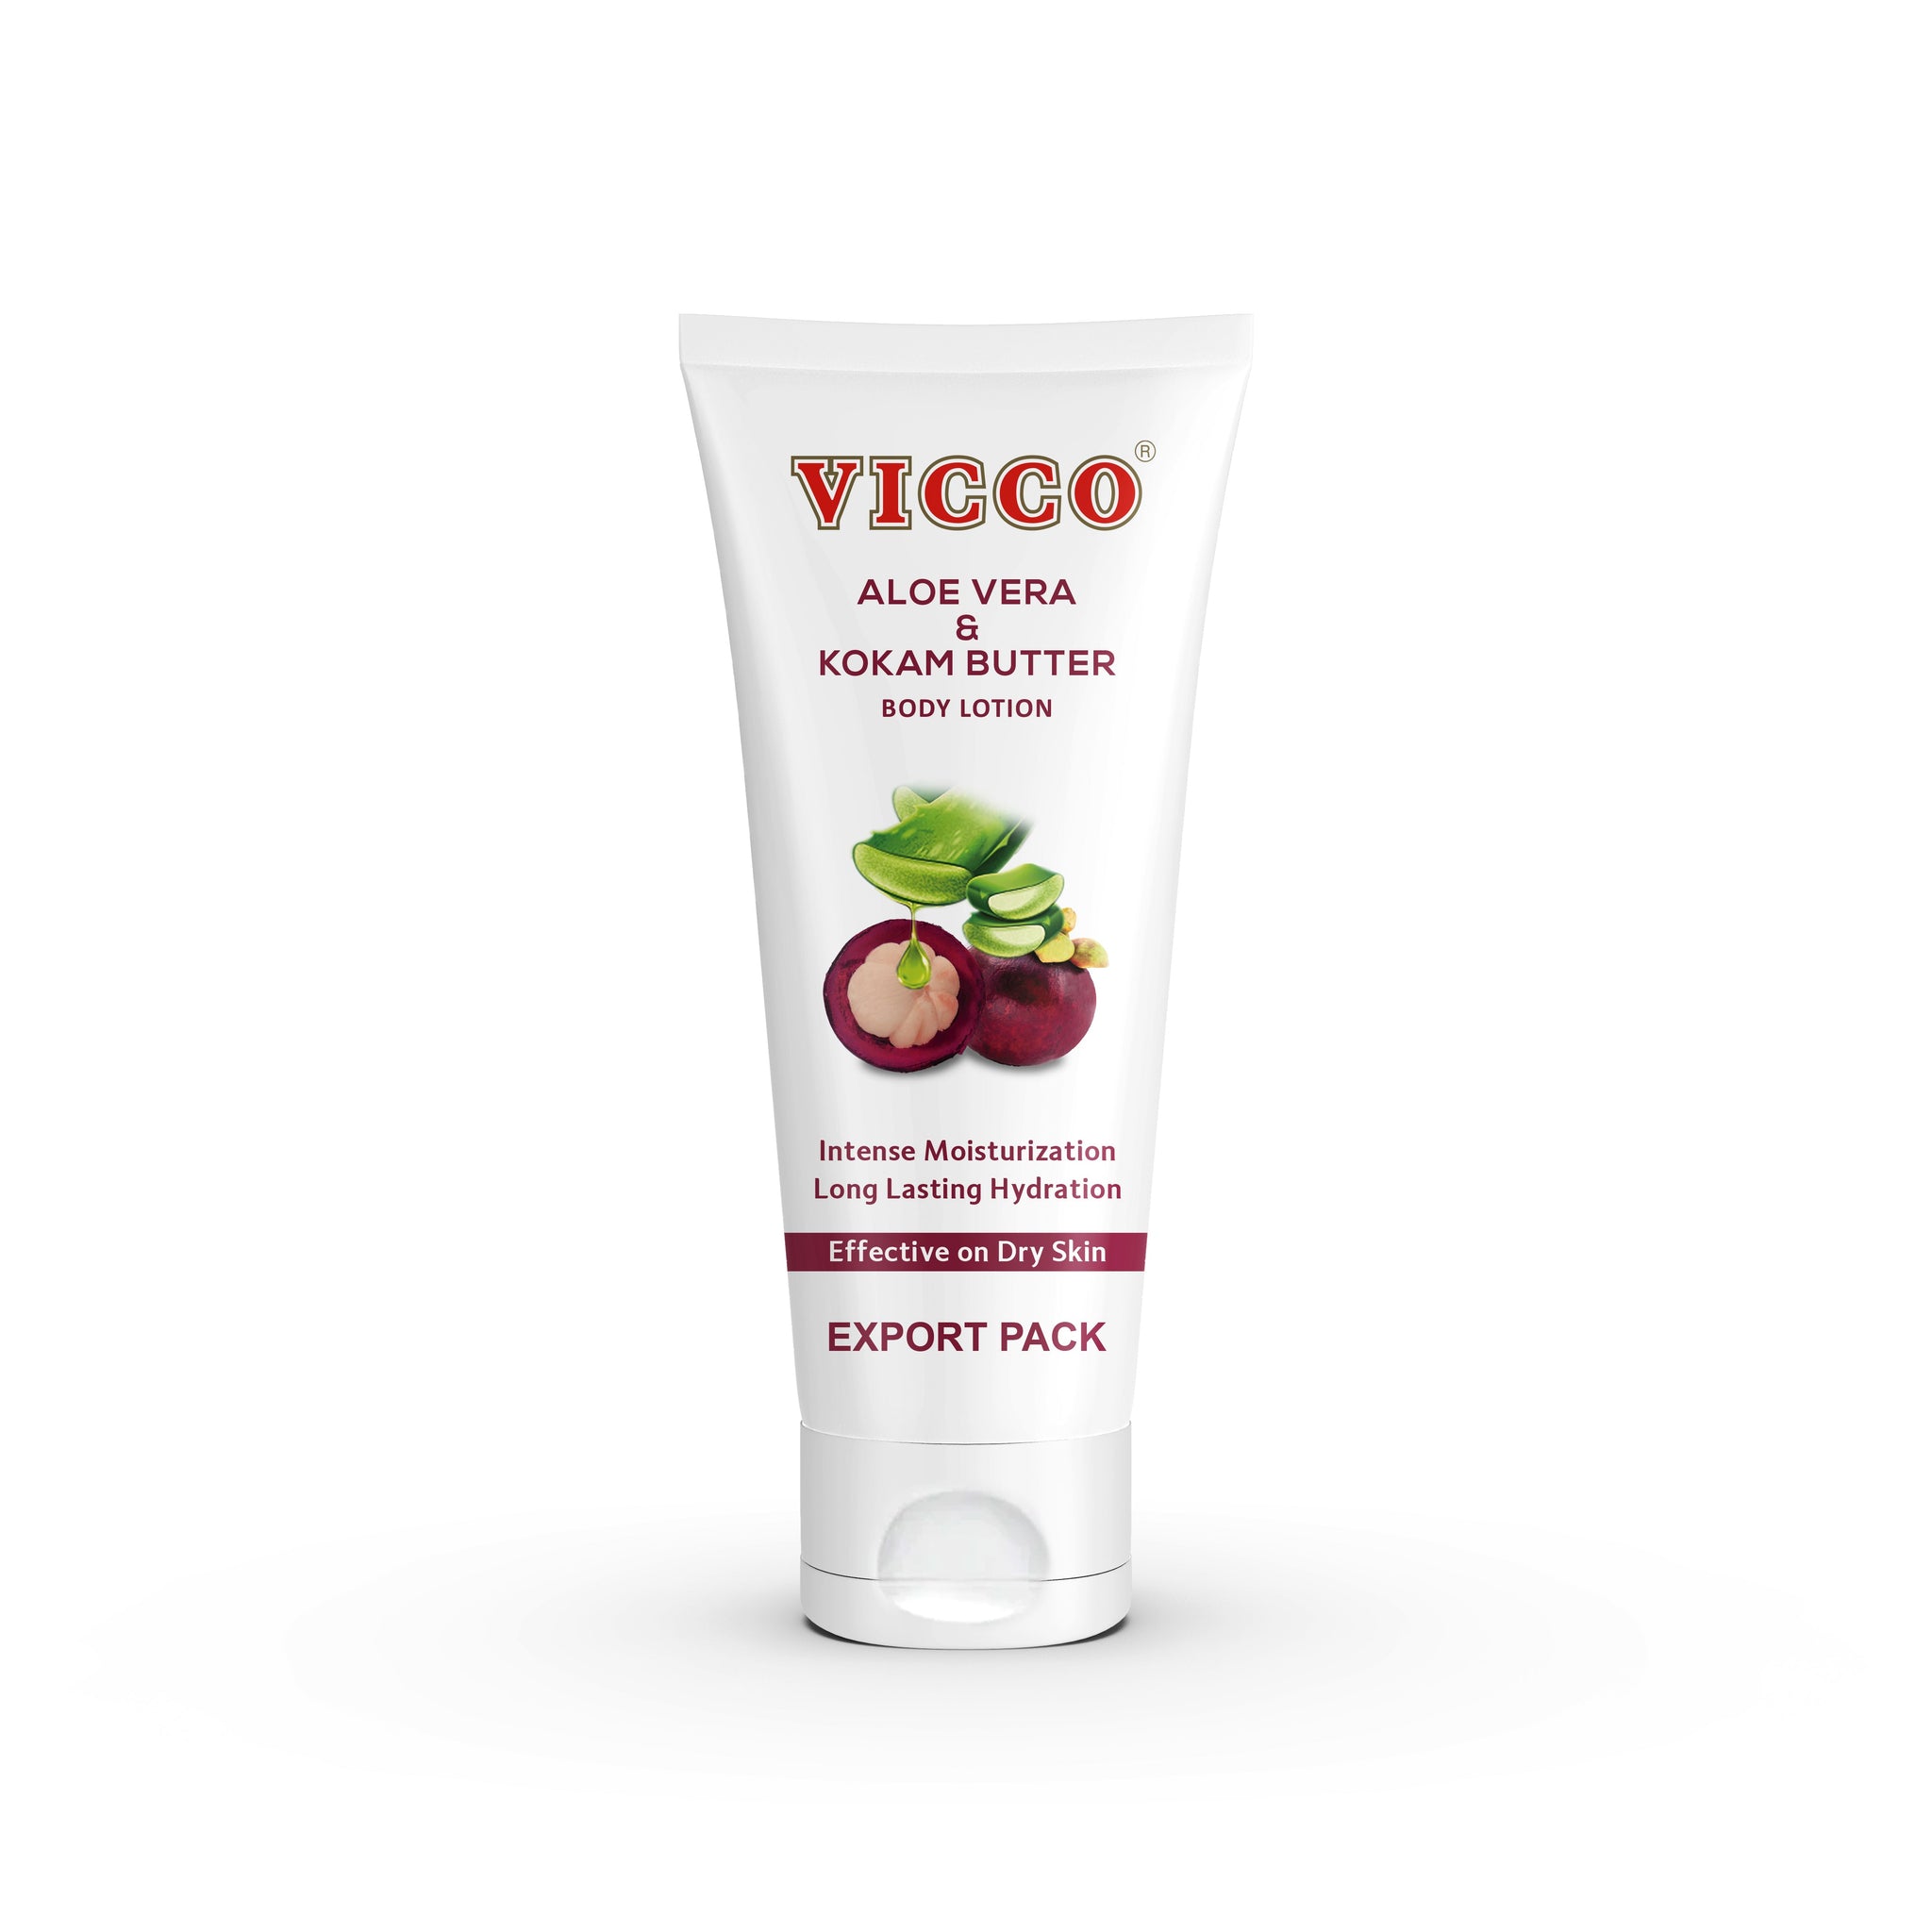 Vicco Aloe vera & kokum butter body lotion (200 g) - UAE